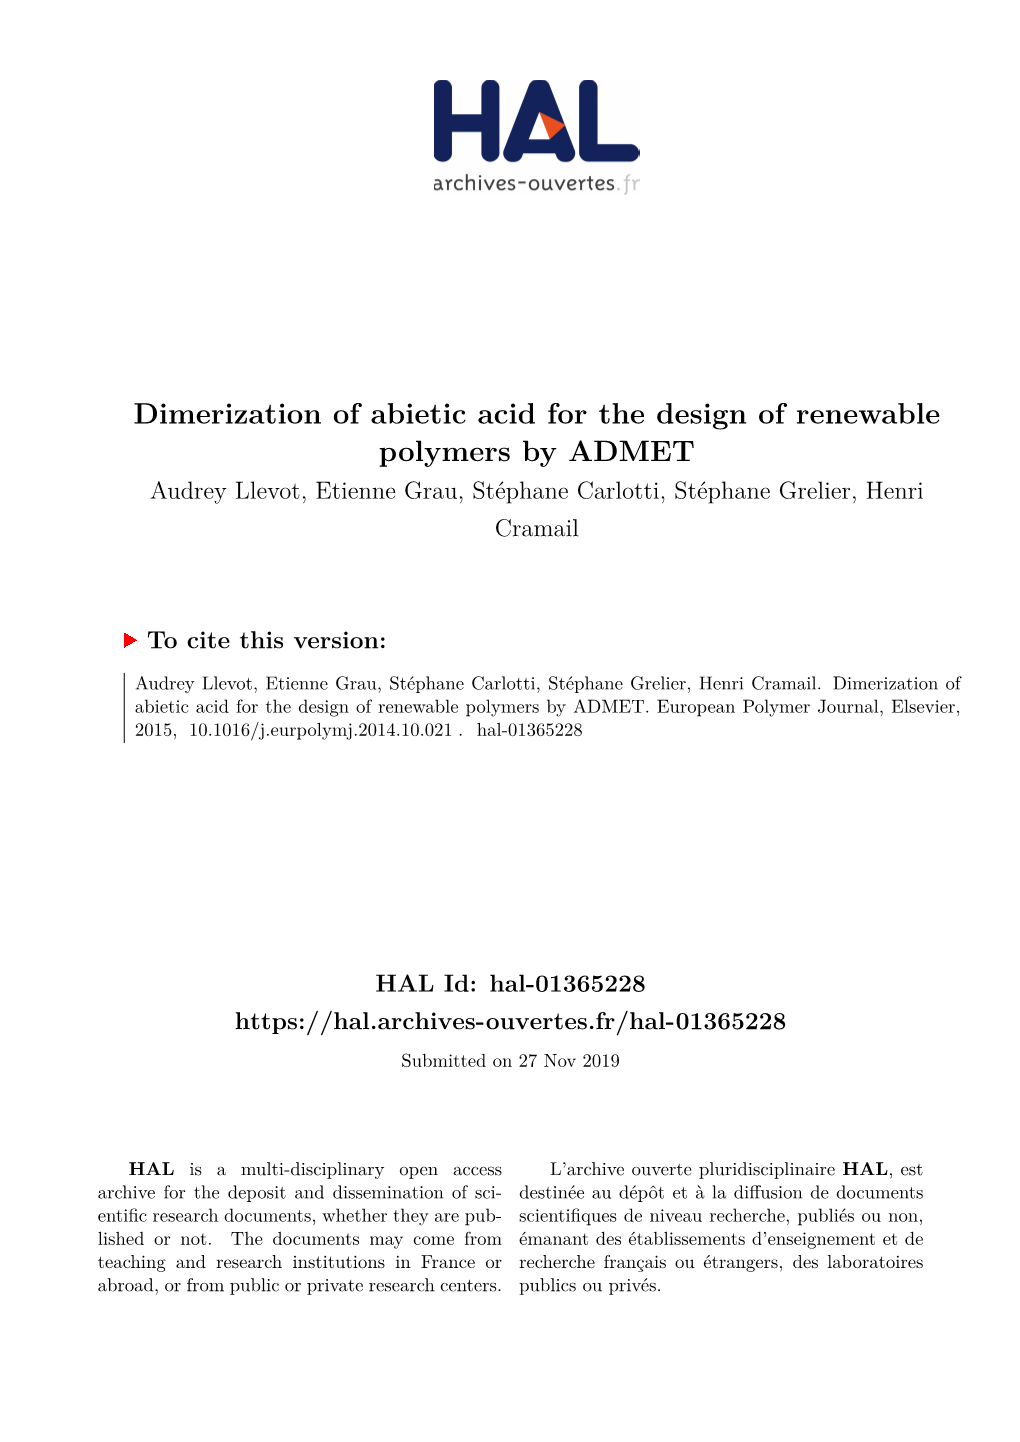 Dimerization of Abietic Acid for the Design of Renewable Polymers by ADMET Audrey Llevot, Etienne Grau, Stéphane Carlotti, Stéphane Grelier, Henri Cramail